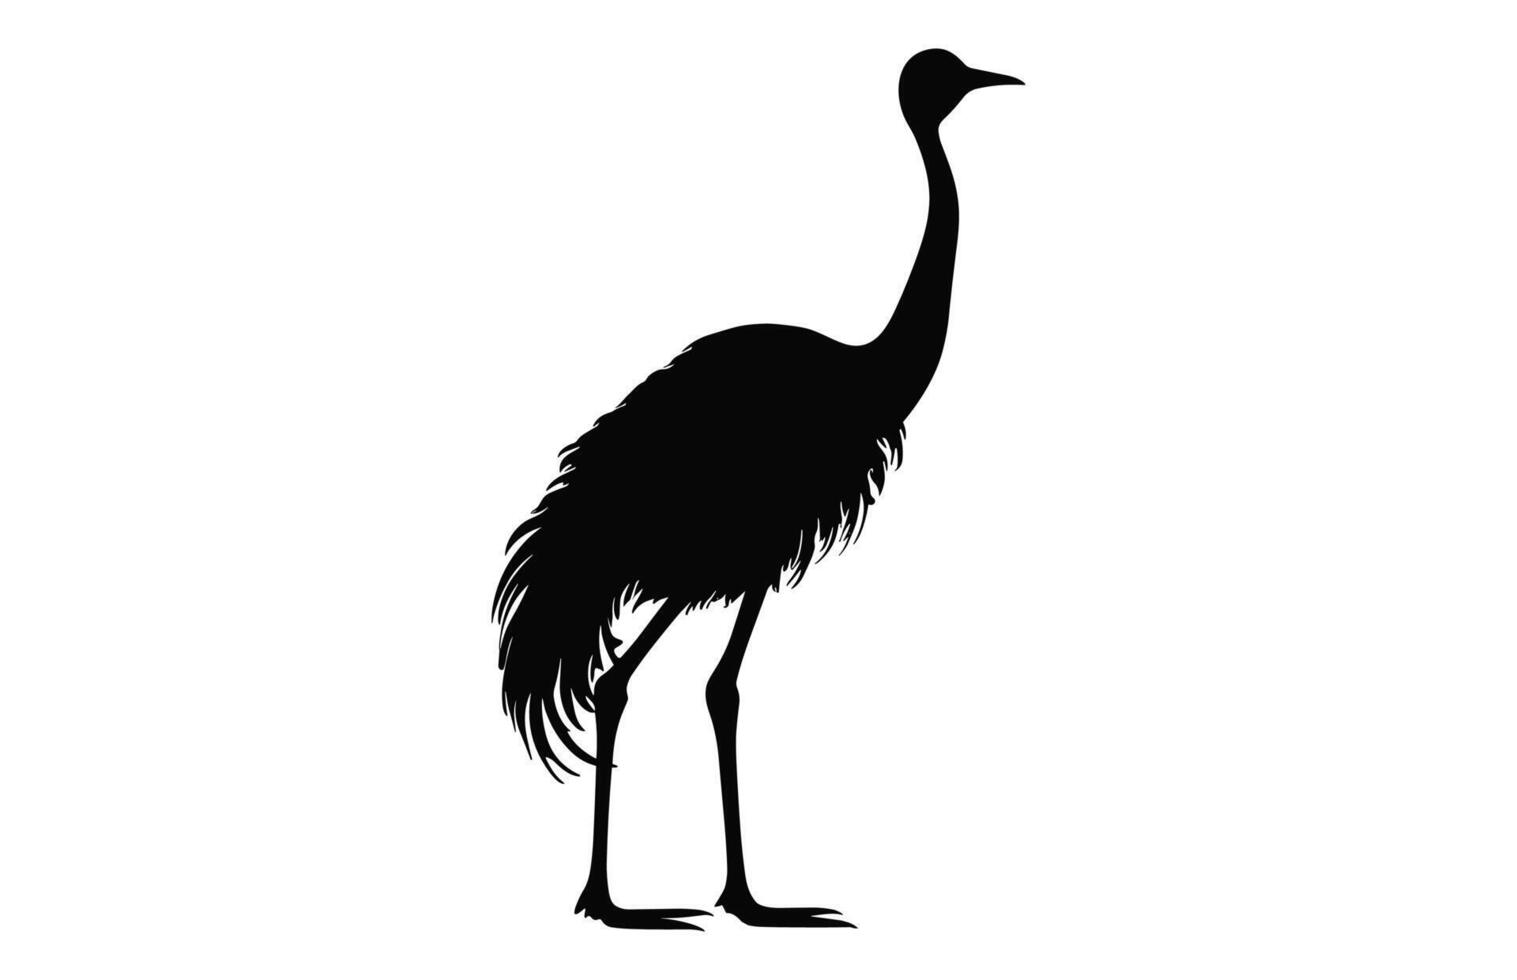 emú silueta aislado en un blanco fondo, un avestruz emú negro silueta, australiano emú pájaro vector